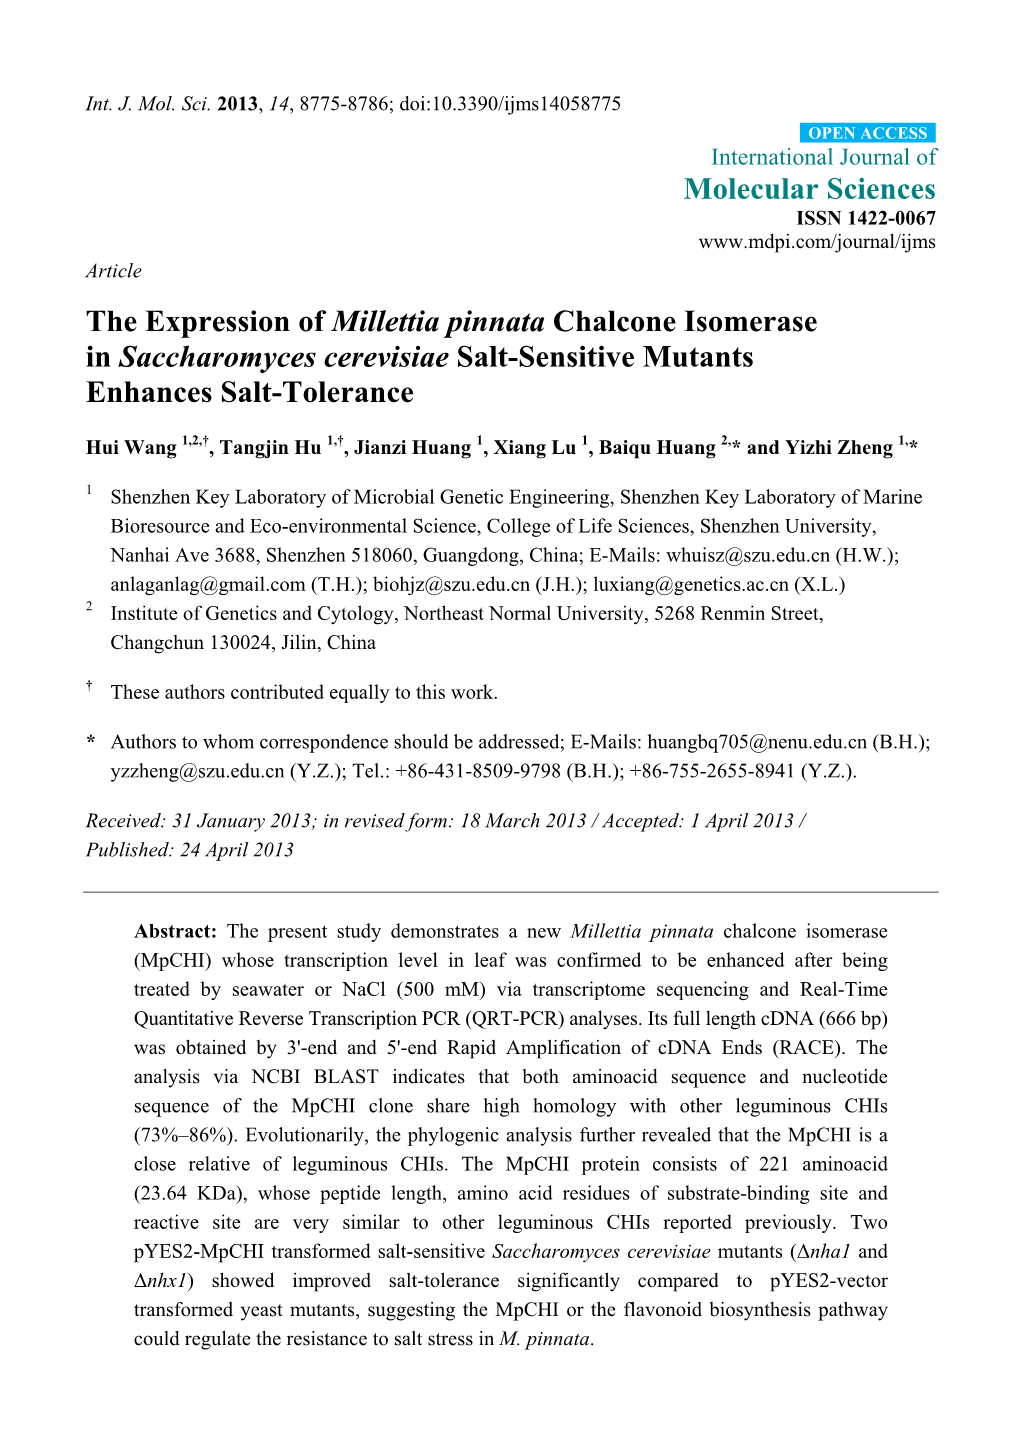 The Expression of Millettia Pinnata Chalcone Isomerase in Saccharomyces Cerevisiae Salt-Sensitive Mutants Enhances Salt-Tolerance